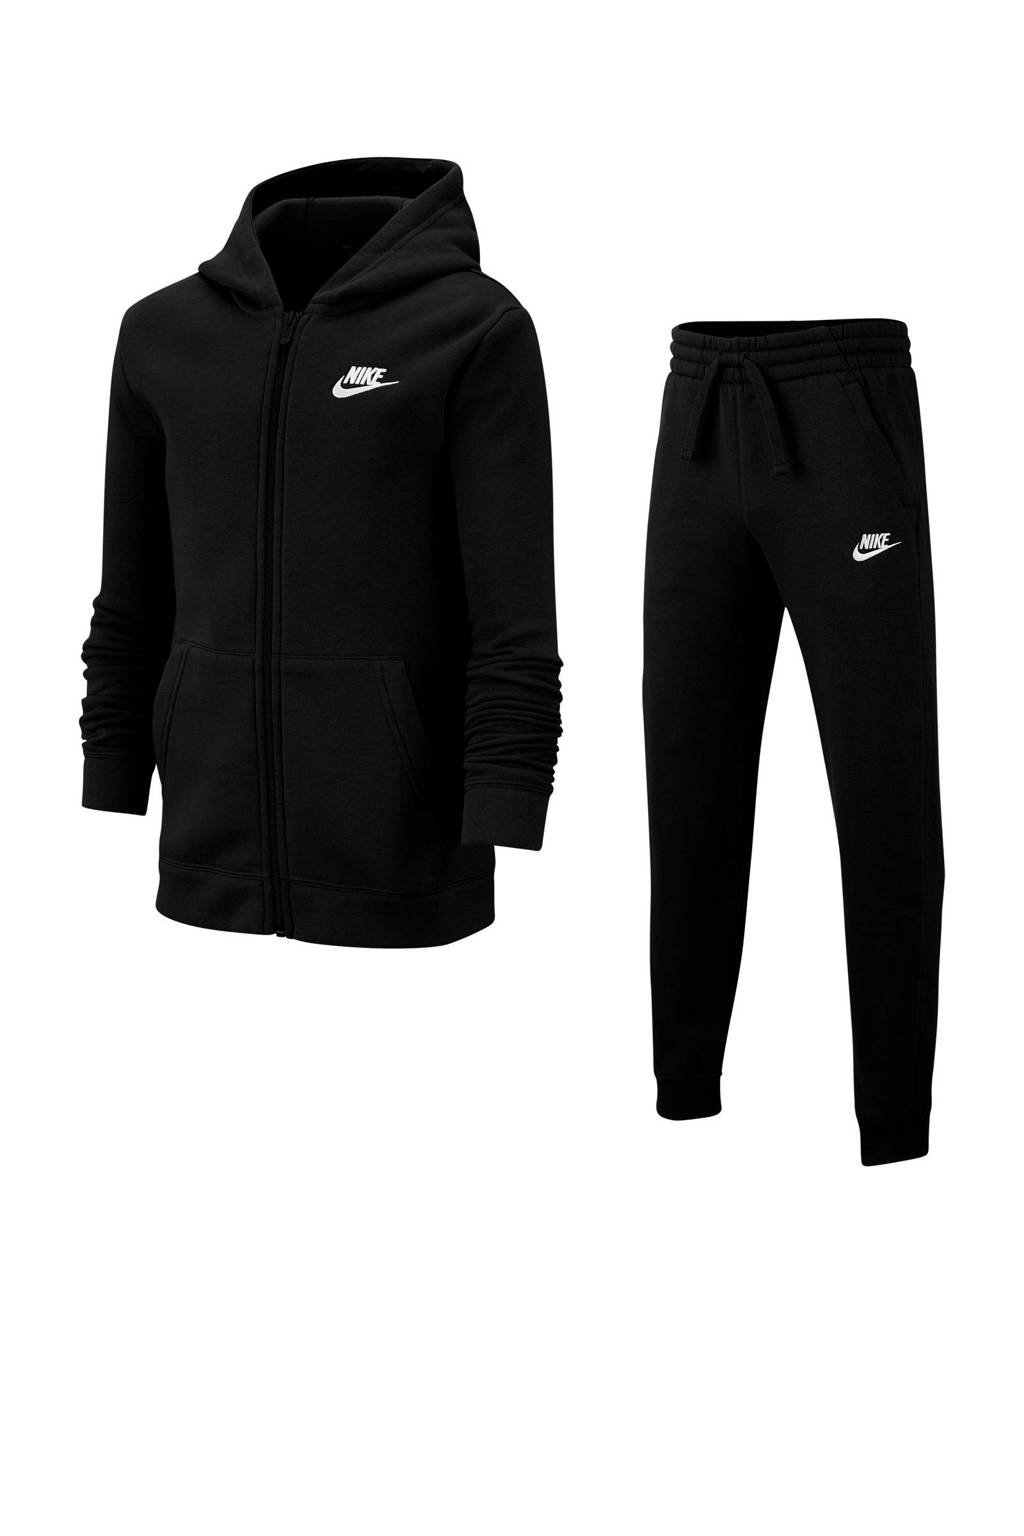 Nike   trainingspak zwart, Zwart/wit